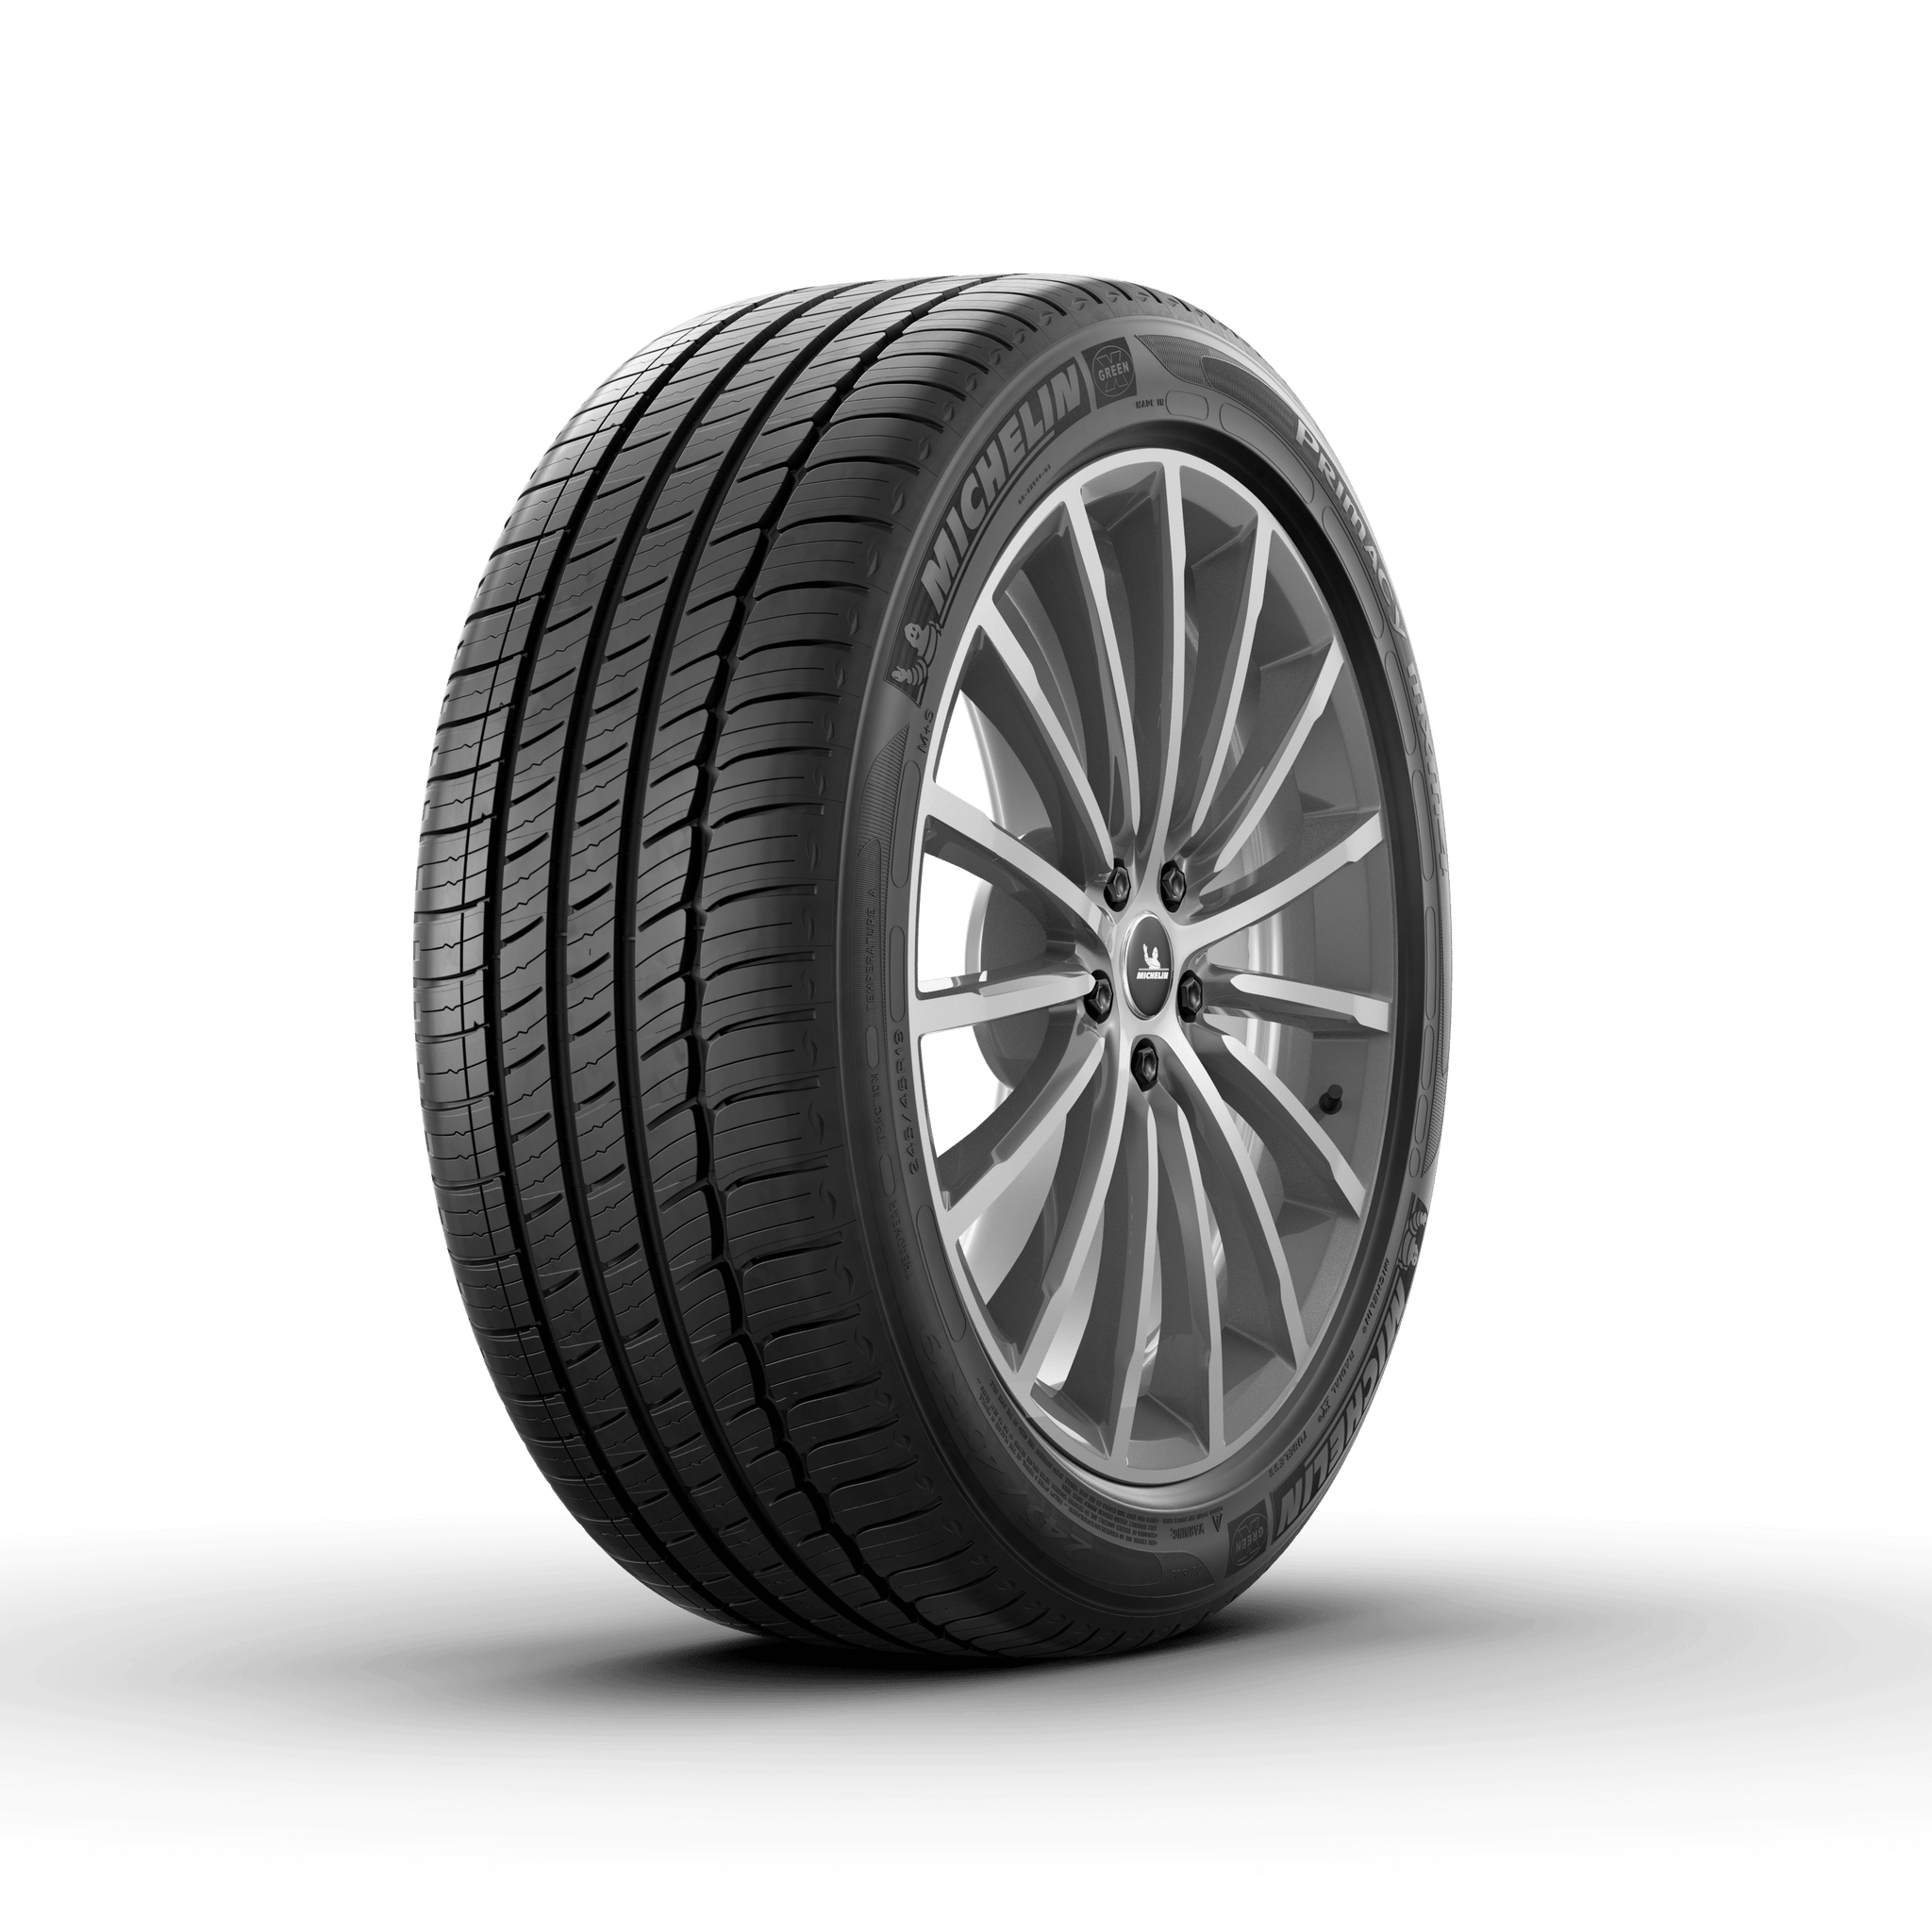 MICHELIN PRIMACY MXM4 235/45R18 (26.3X9.3R 18) Tires